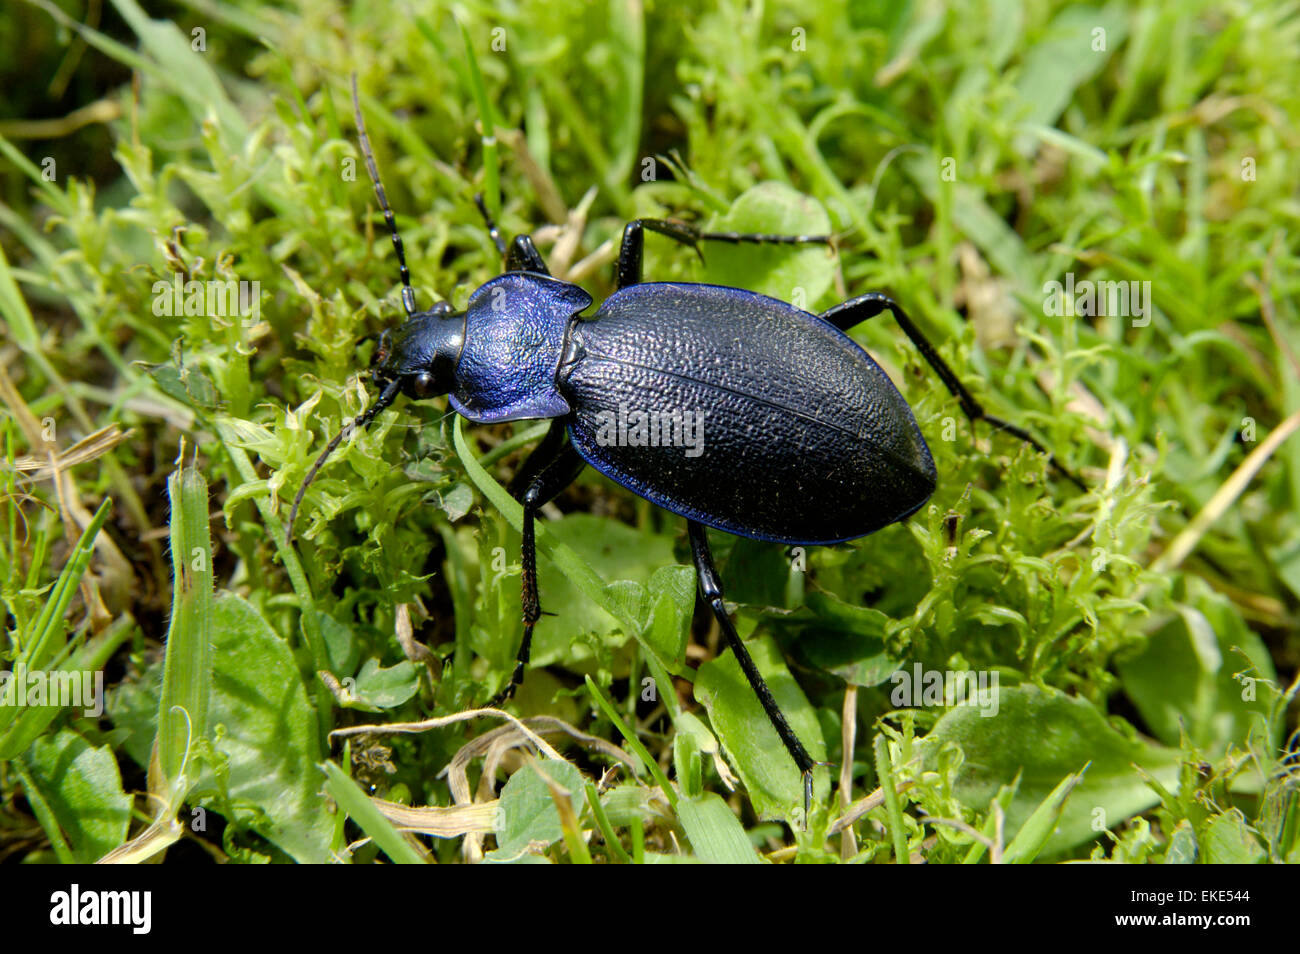 Massa viola Beetle - Carabus tendente al violaceo Foto Stock